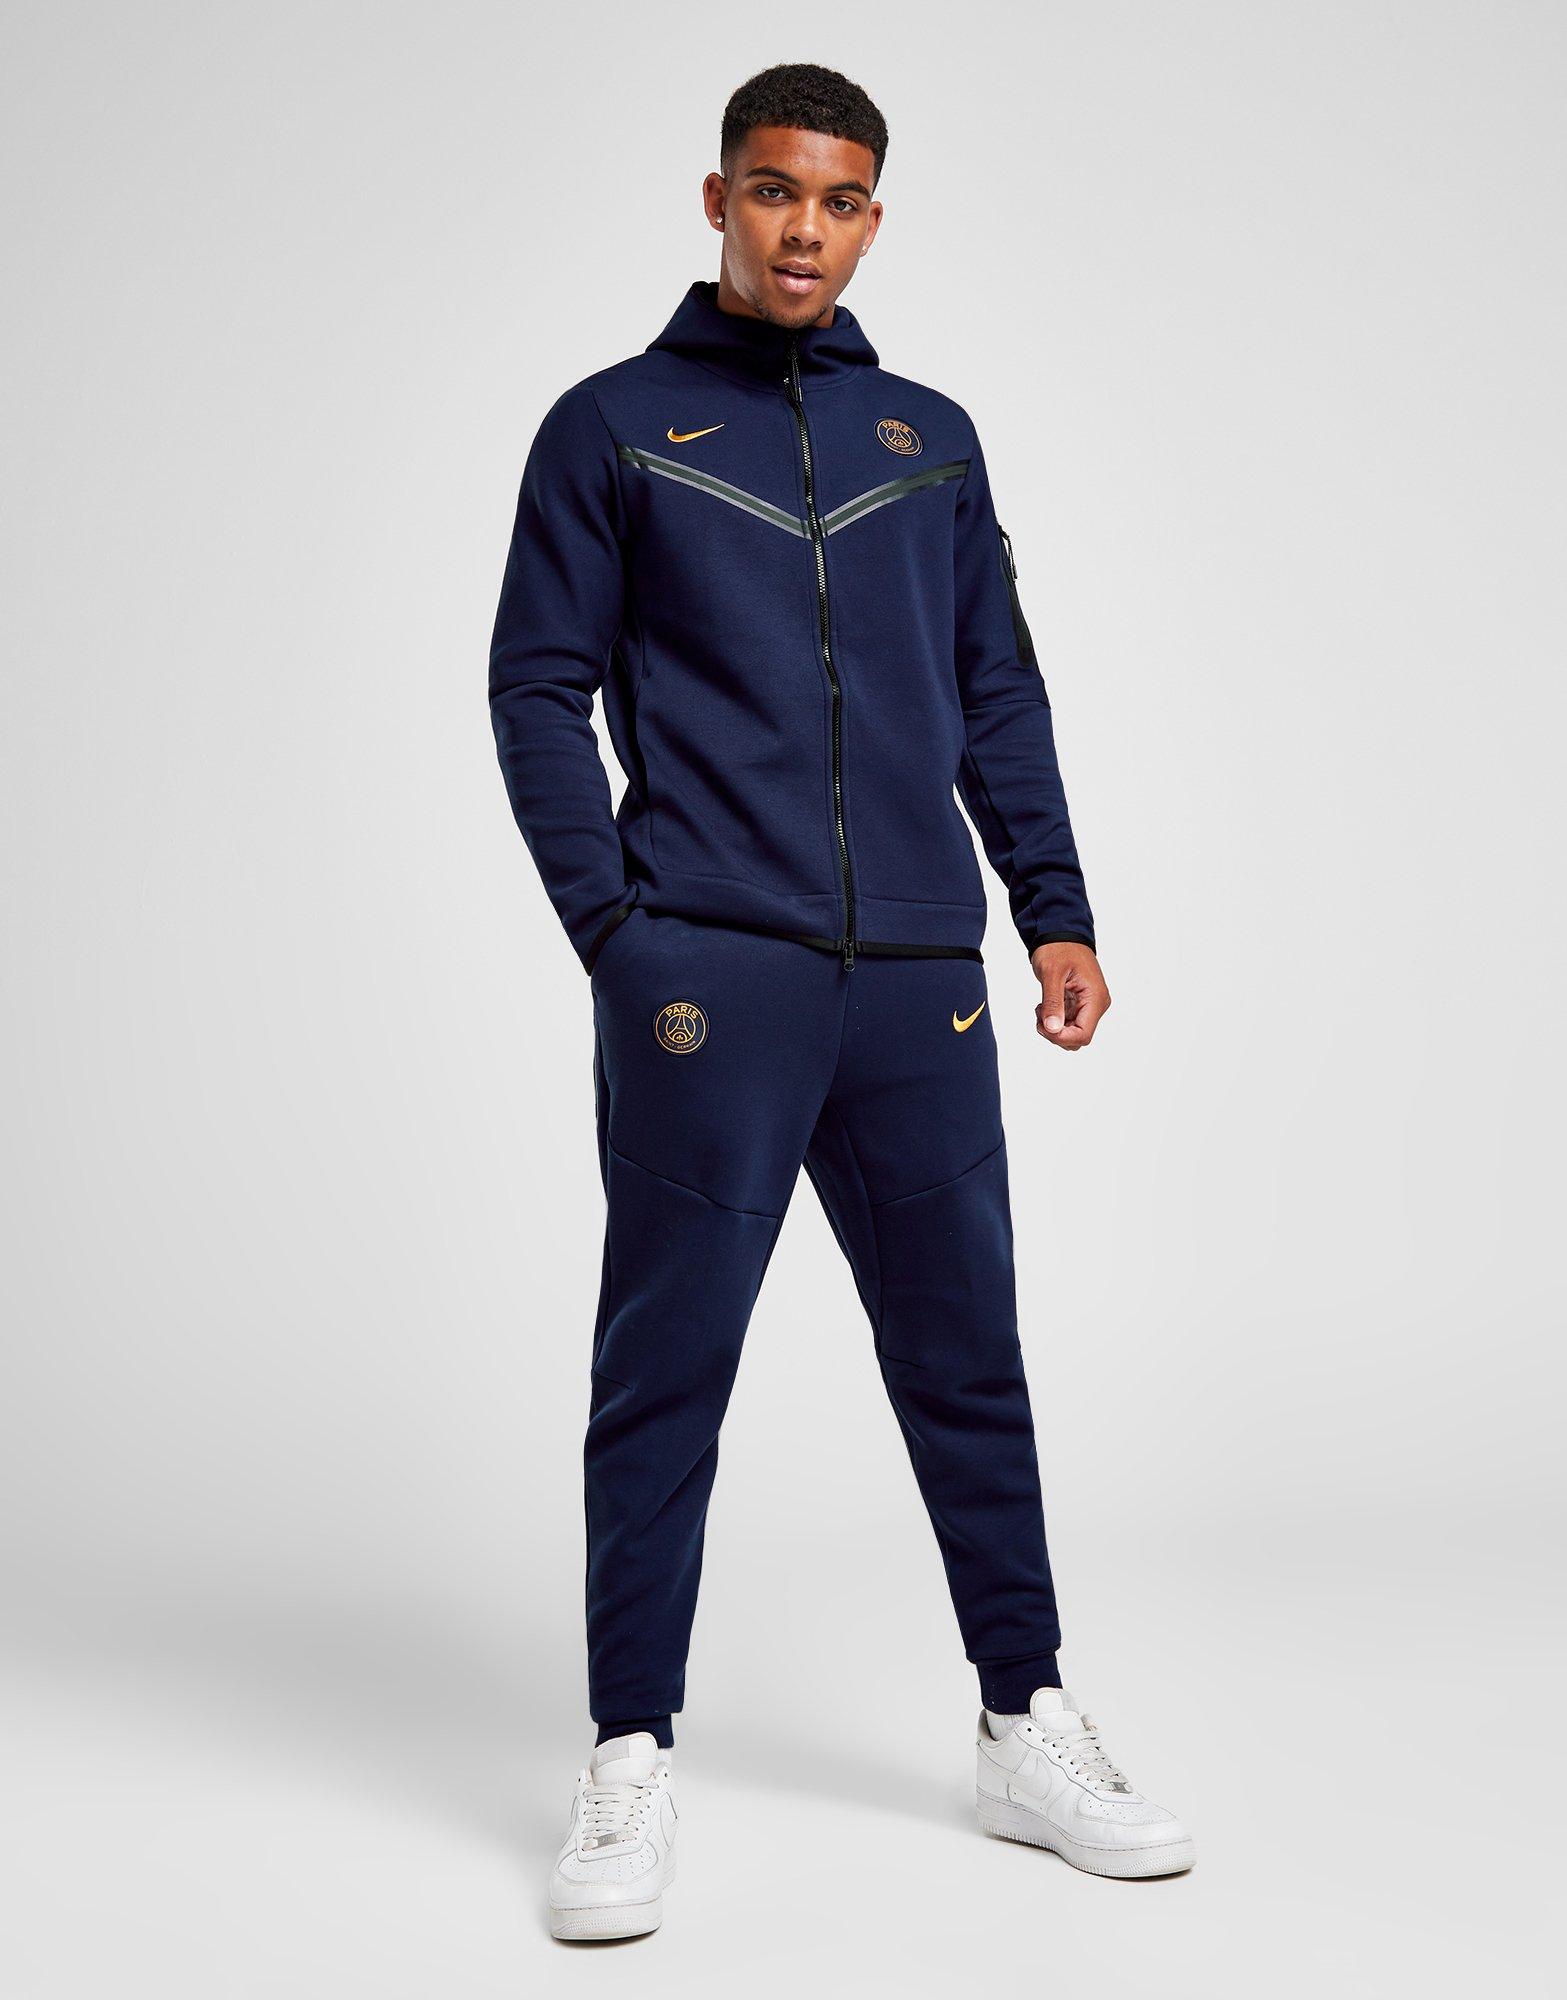 Nike Jordan x Psg Paris Saint Germain Hoodie Pullover Pockets New Blue 22M  Men S